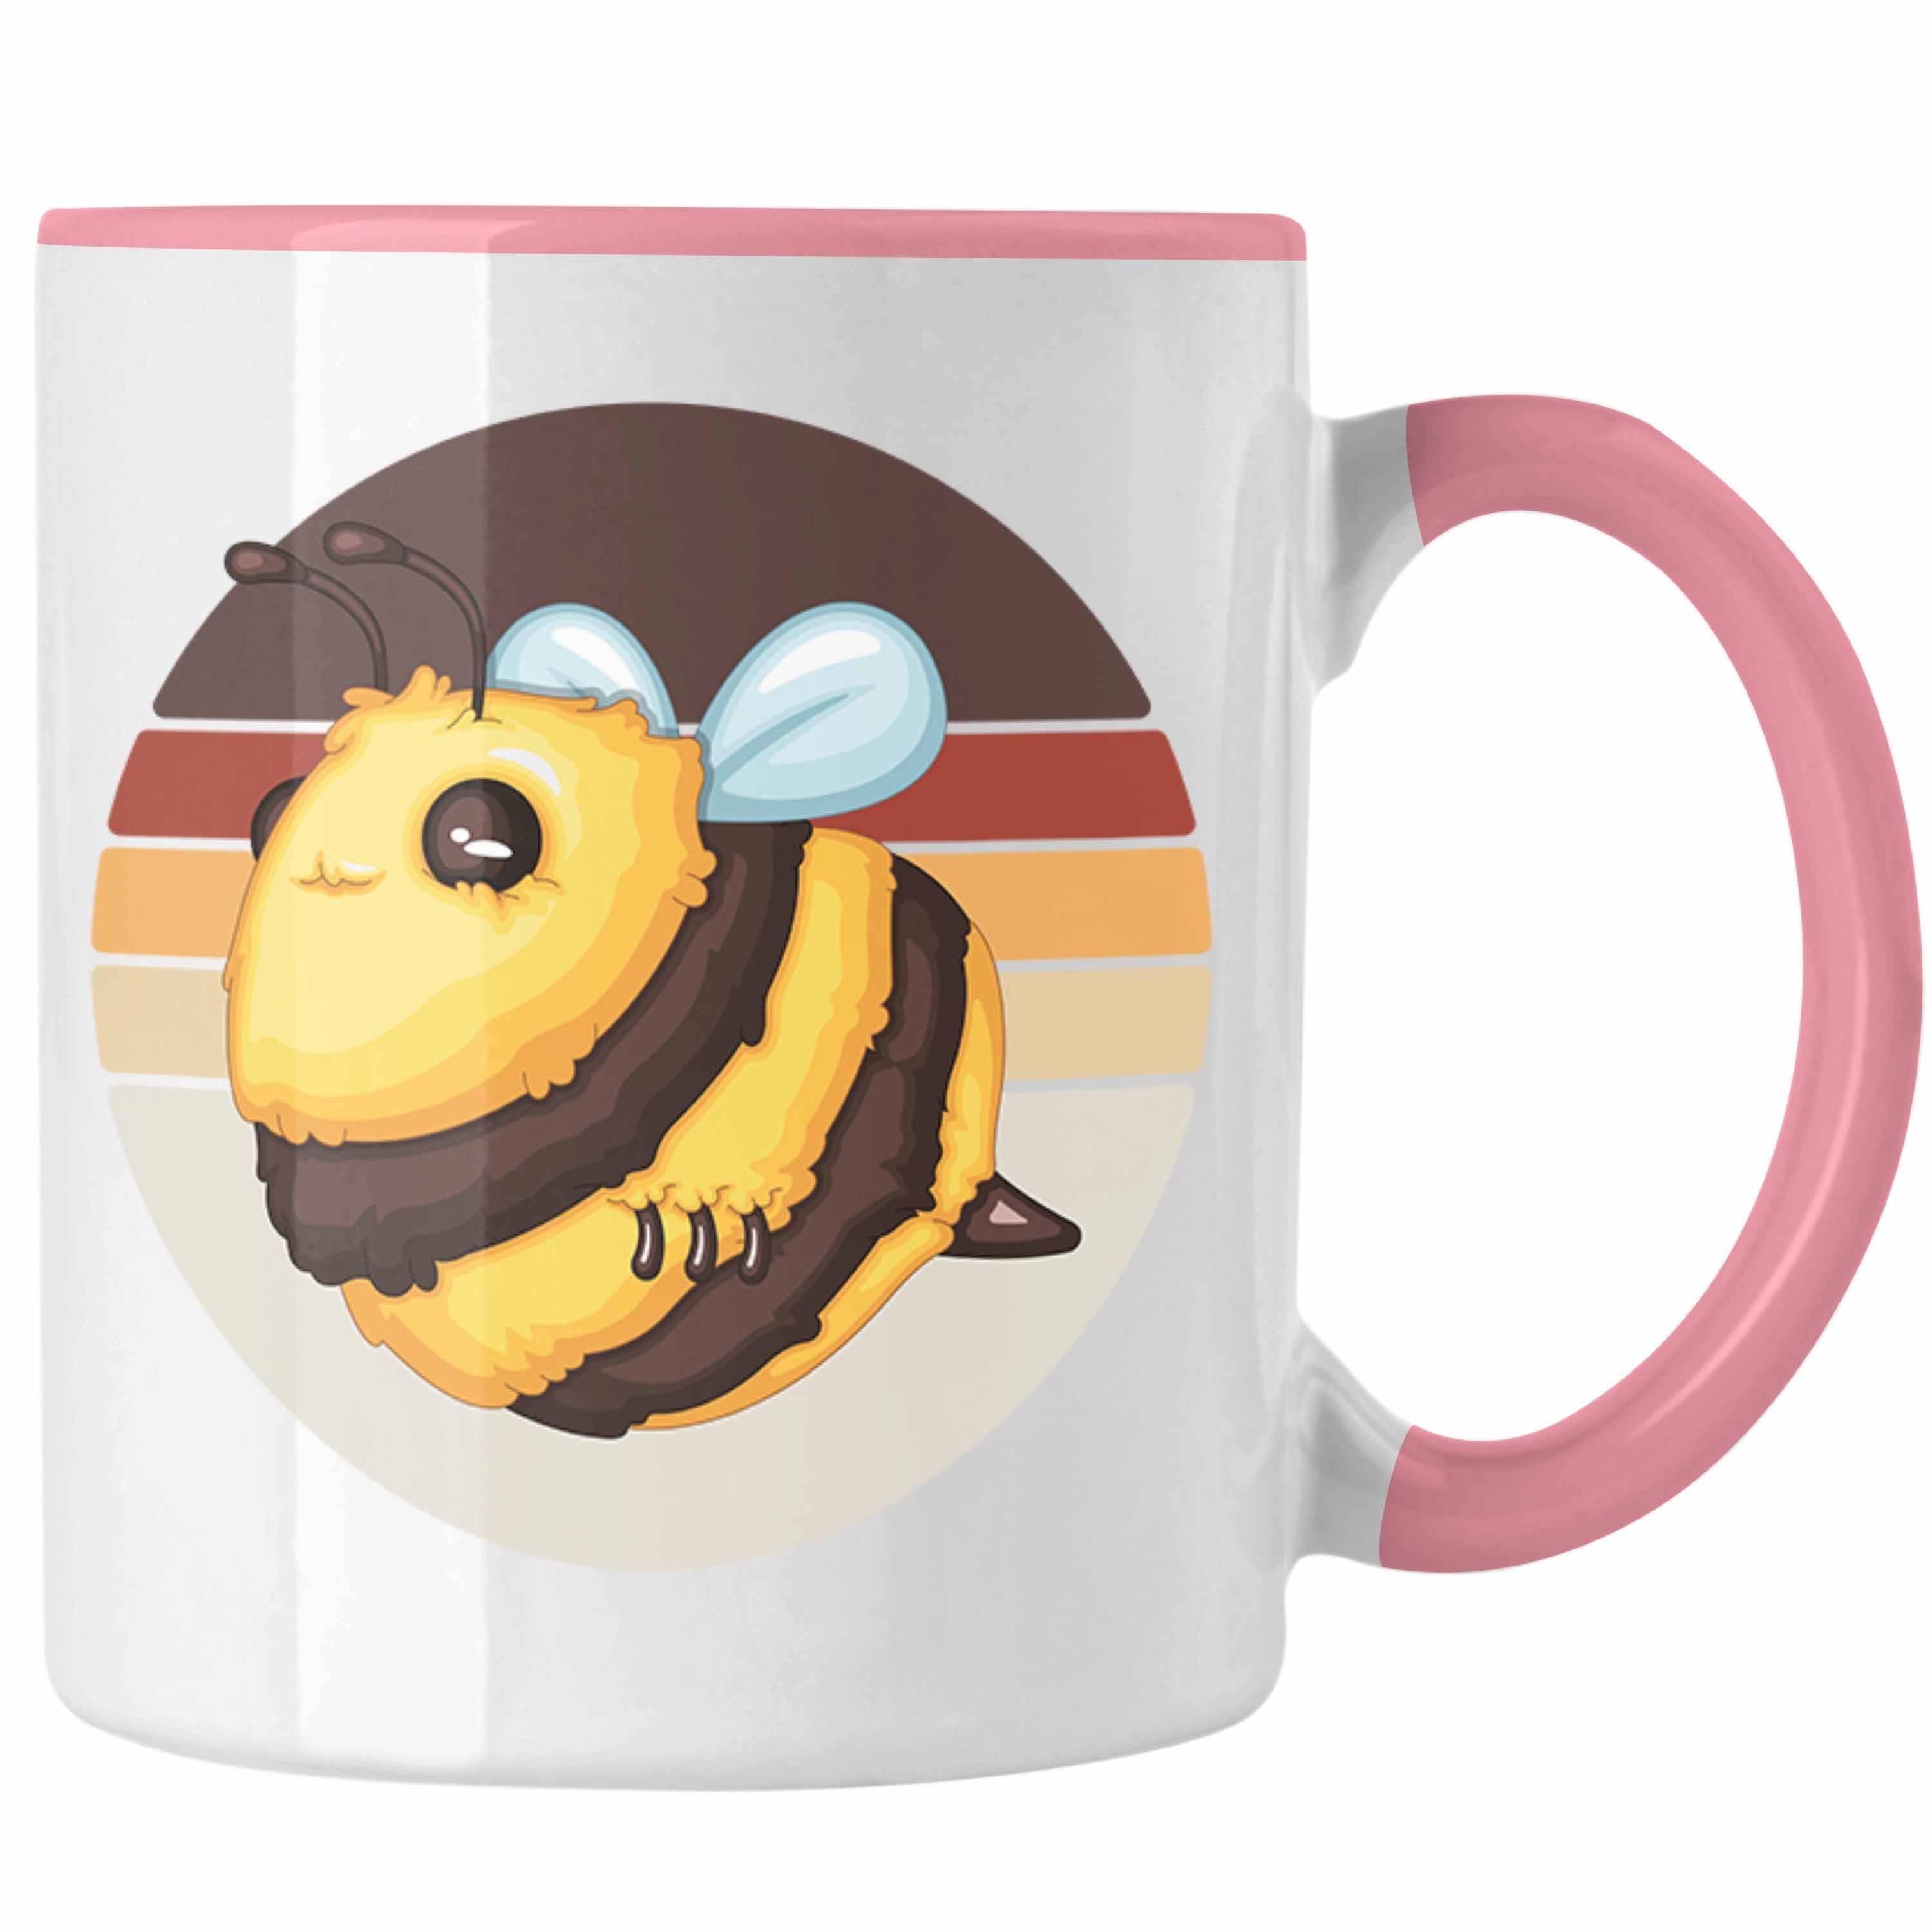 Trendation Tasse Hummel Grafik Tasse Geschenk Bienen Züchter Imker Geschenkidee Rosa